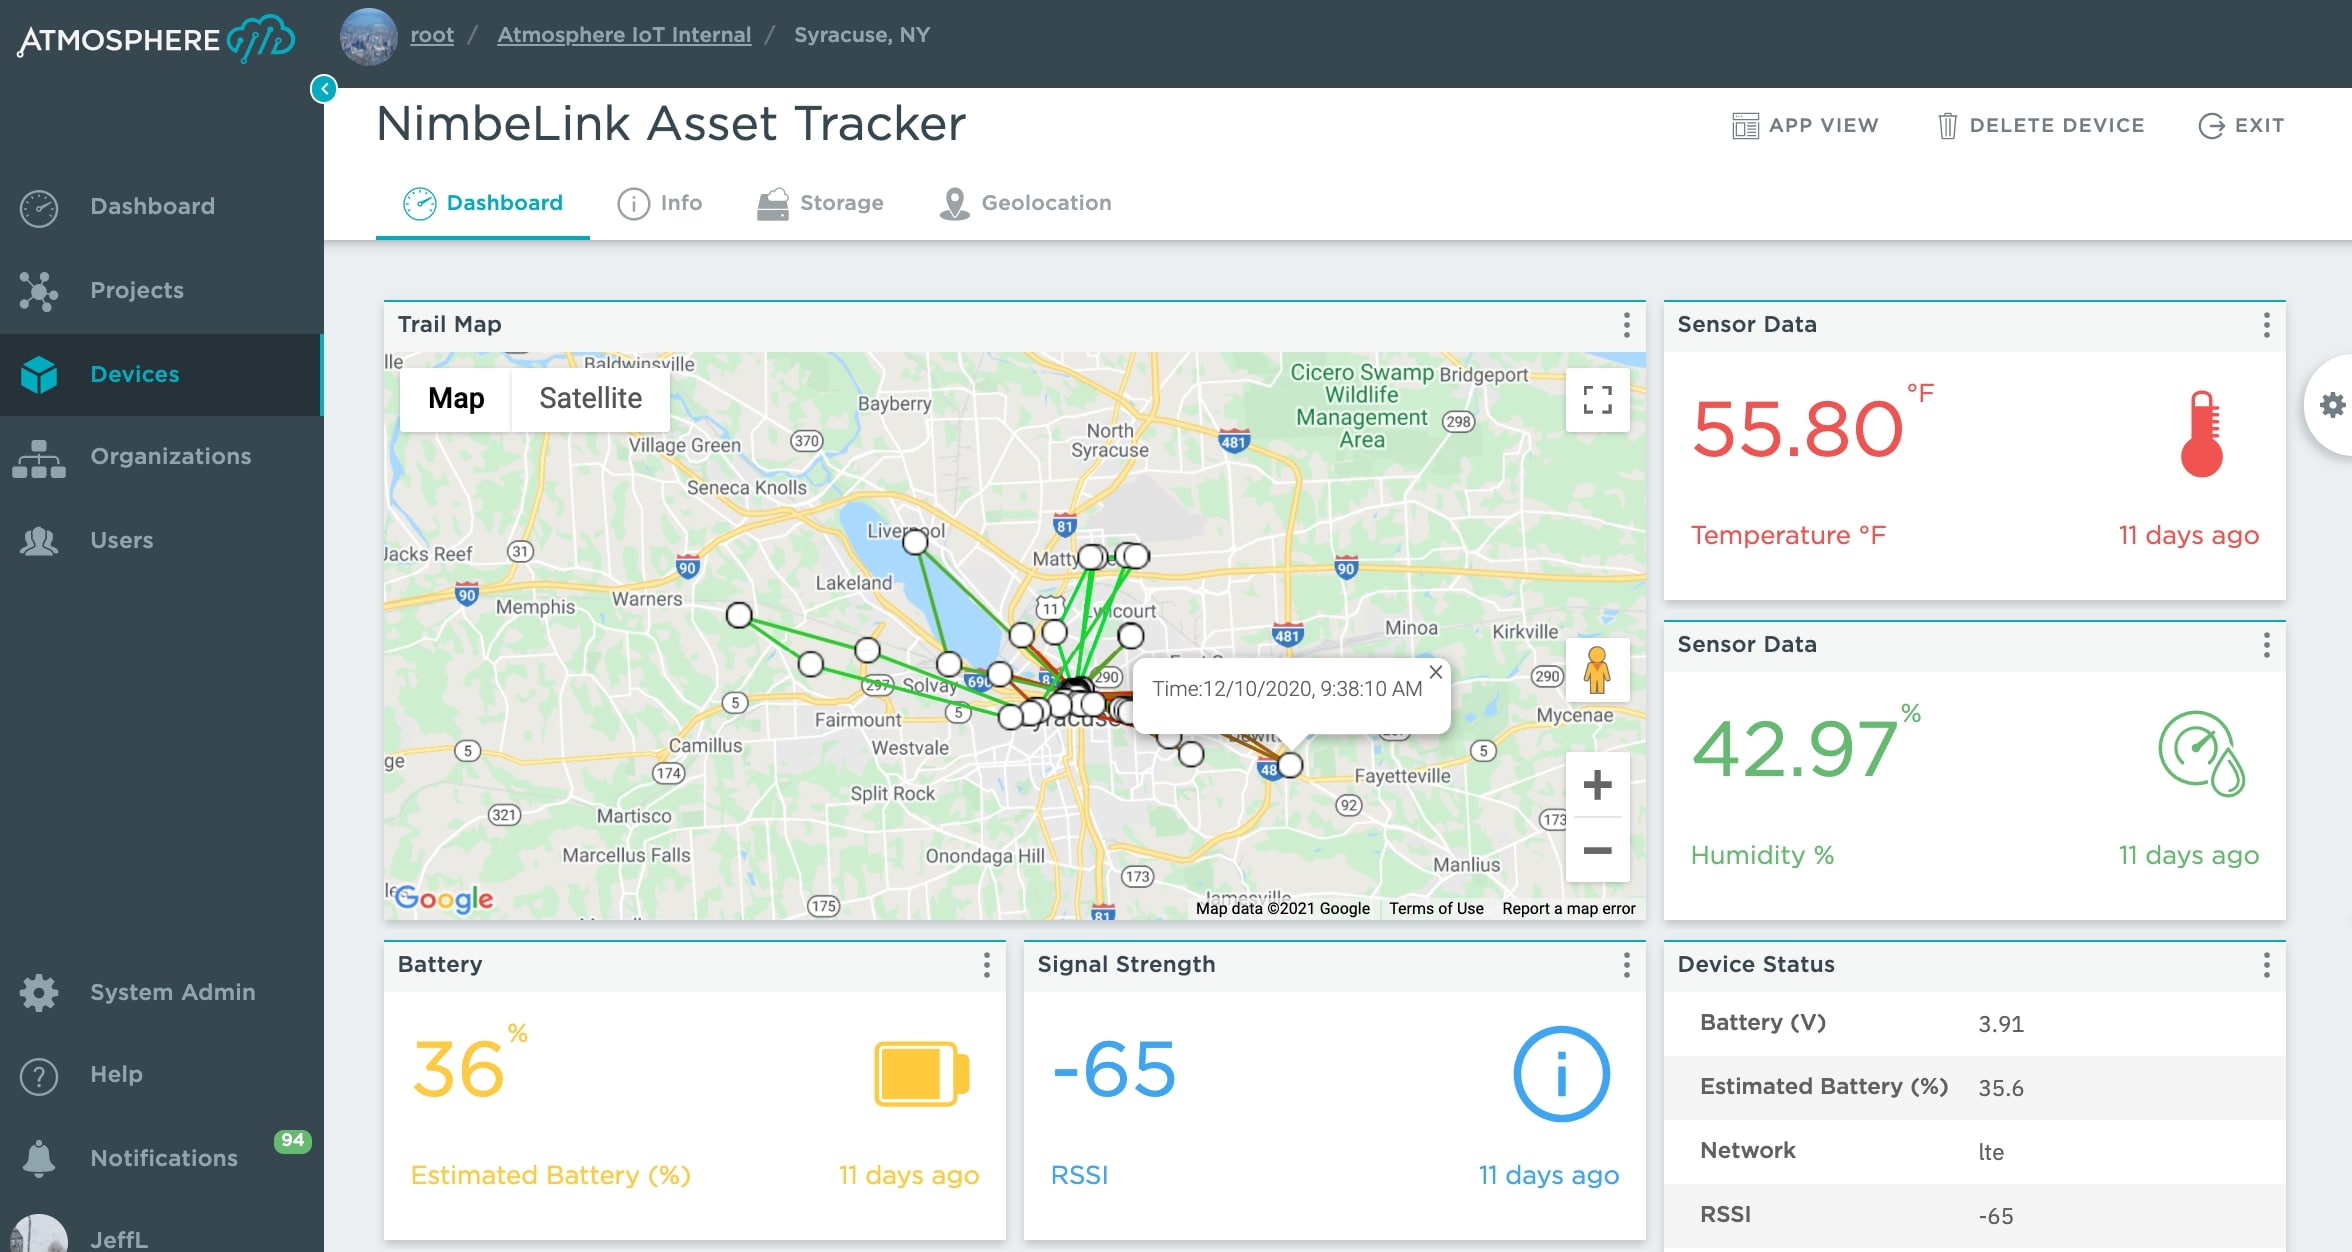 Atmosphere IoT Dashboard viewing a NimbeLink Asset Tracker sensor data